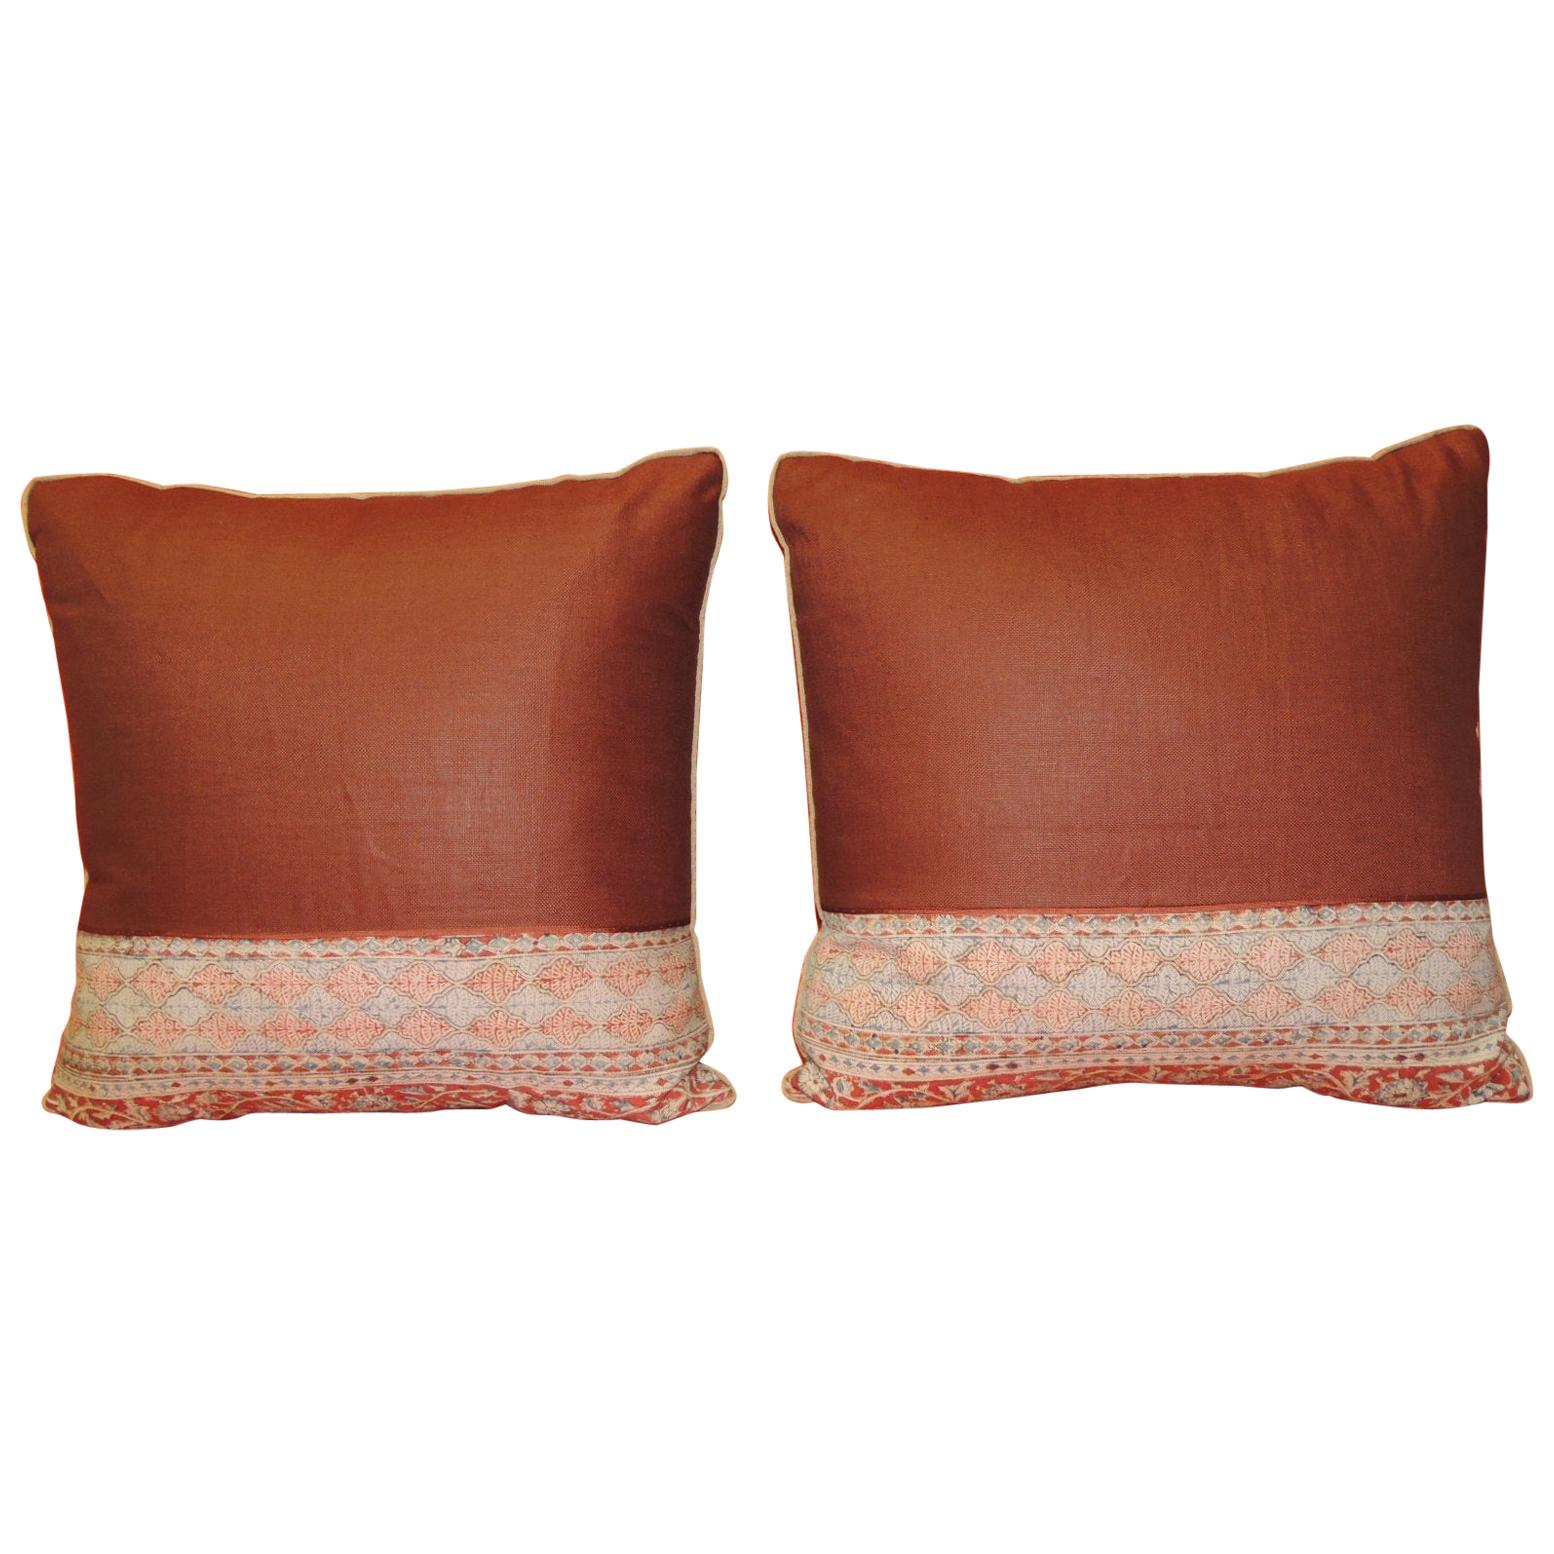 Pair of Vintage Kalamkari Indian Square Decorative Pillows